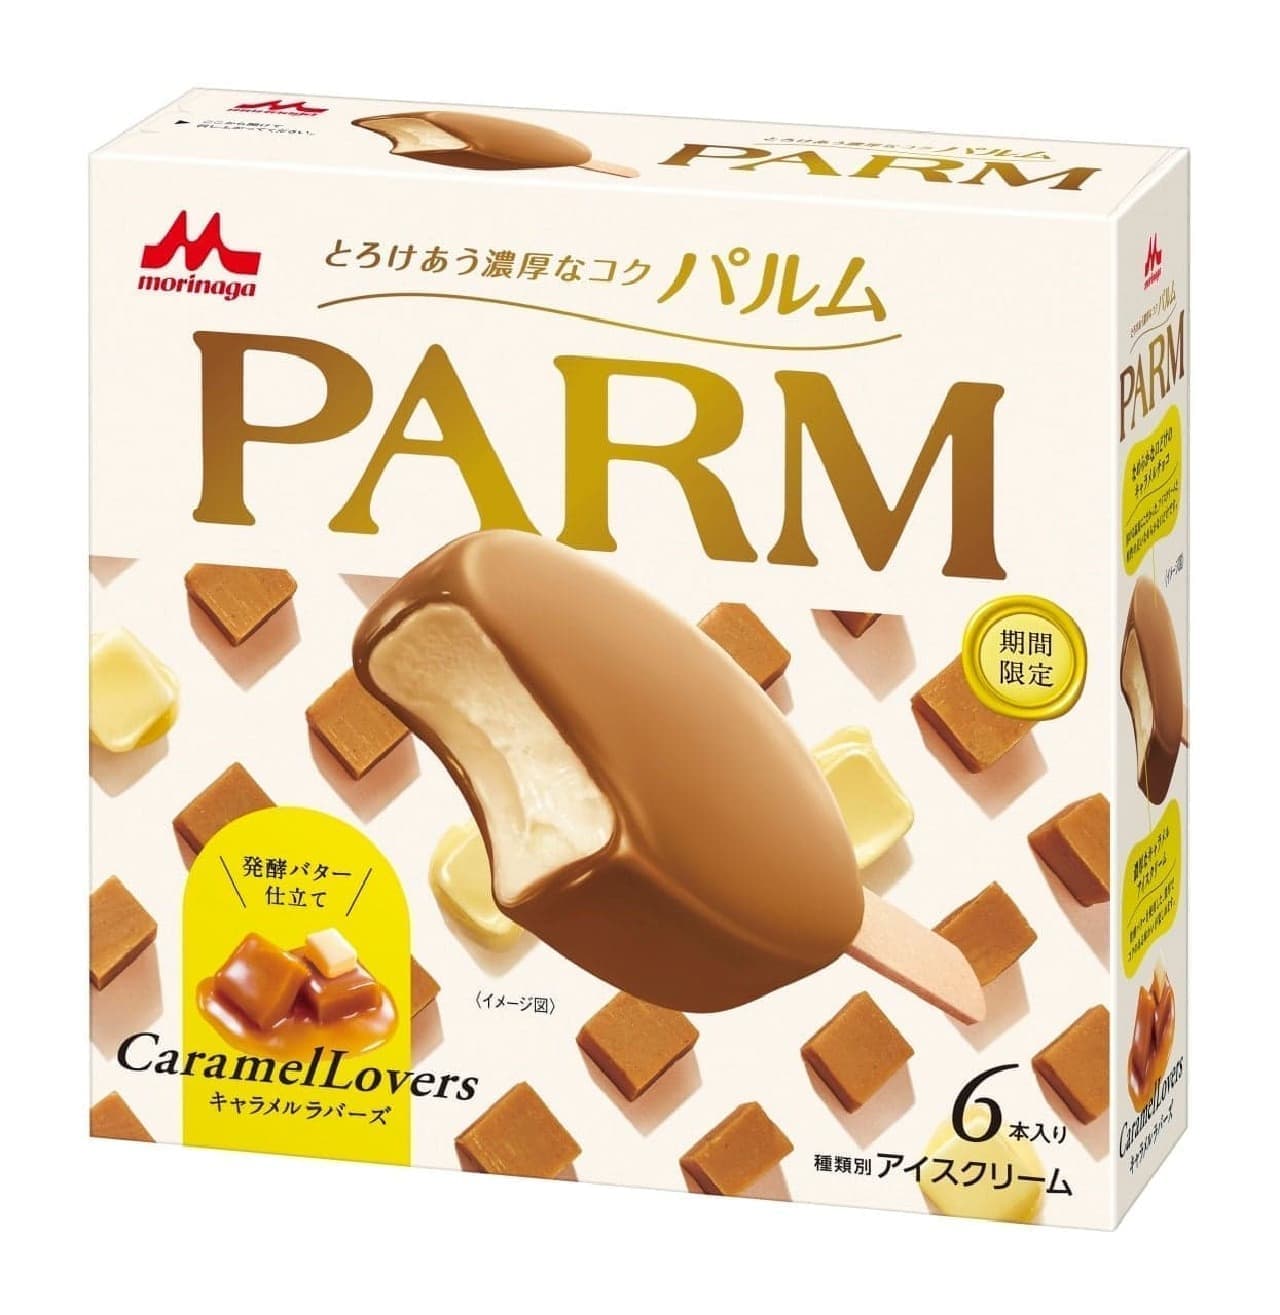 Ice Cream "PARM "Parm Caramel Lovers (6-pack)